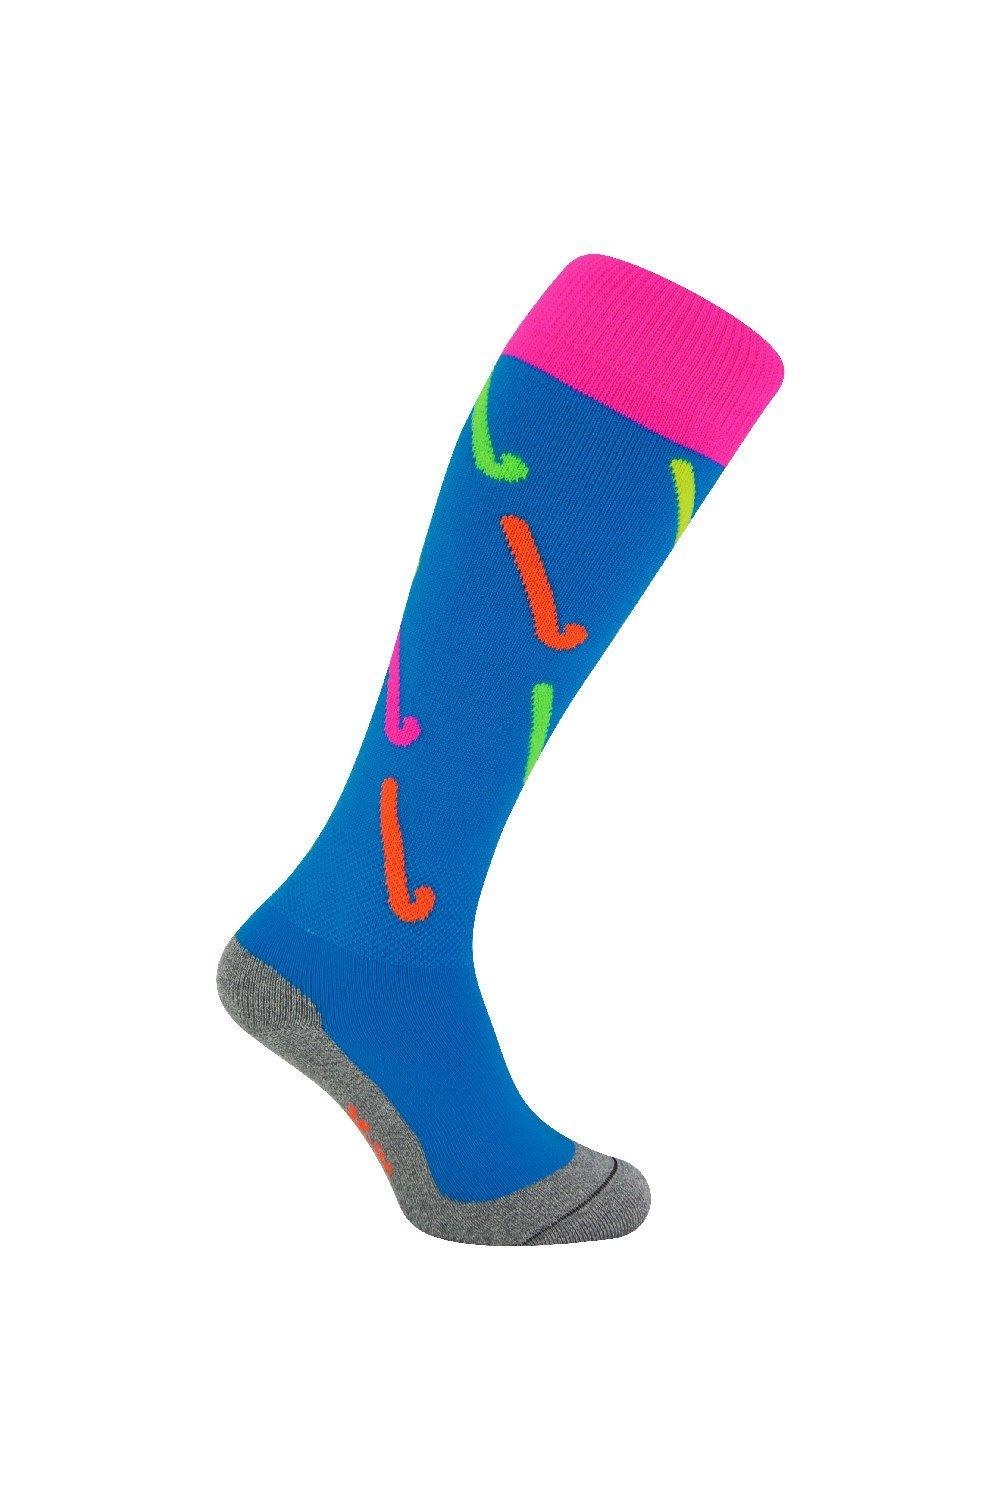 Long Hockey Sport Socks with Hockey Stick Designs